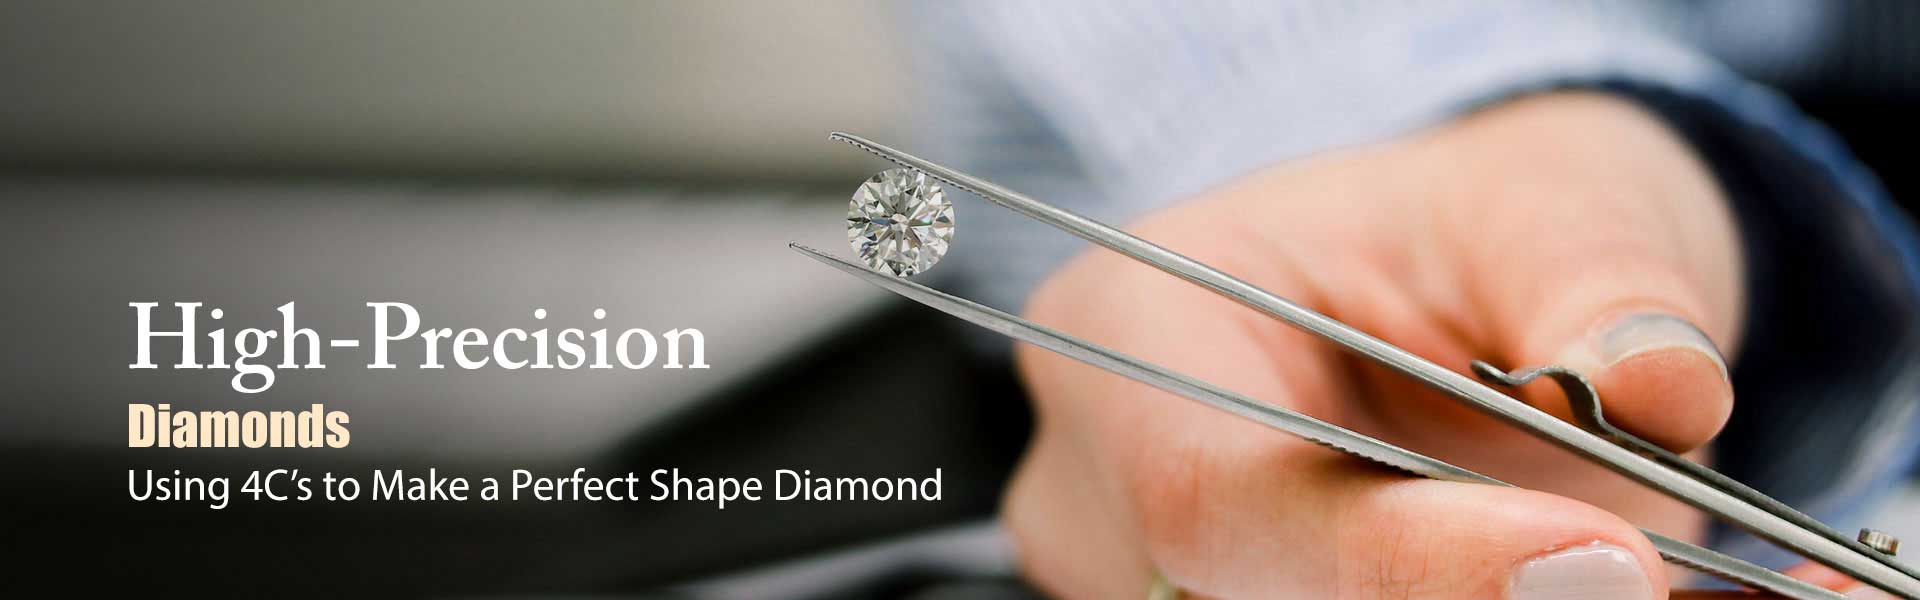  Certified Diamond  Manufacturers in Shanghai